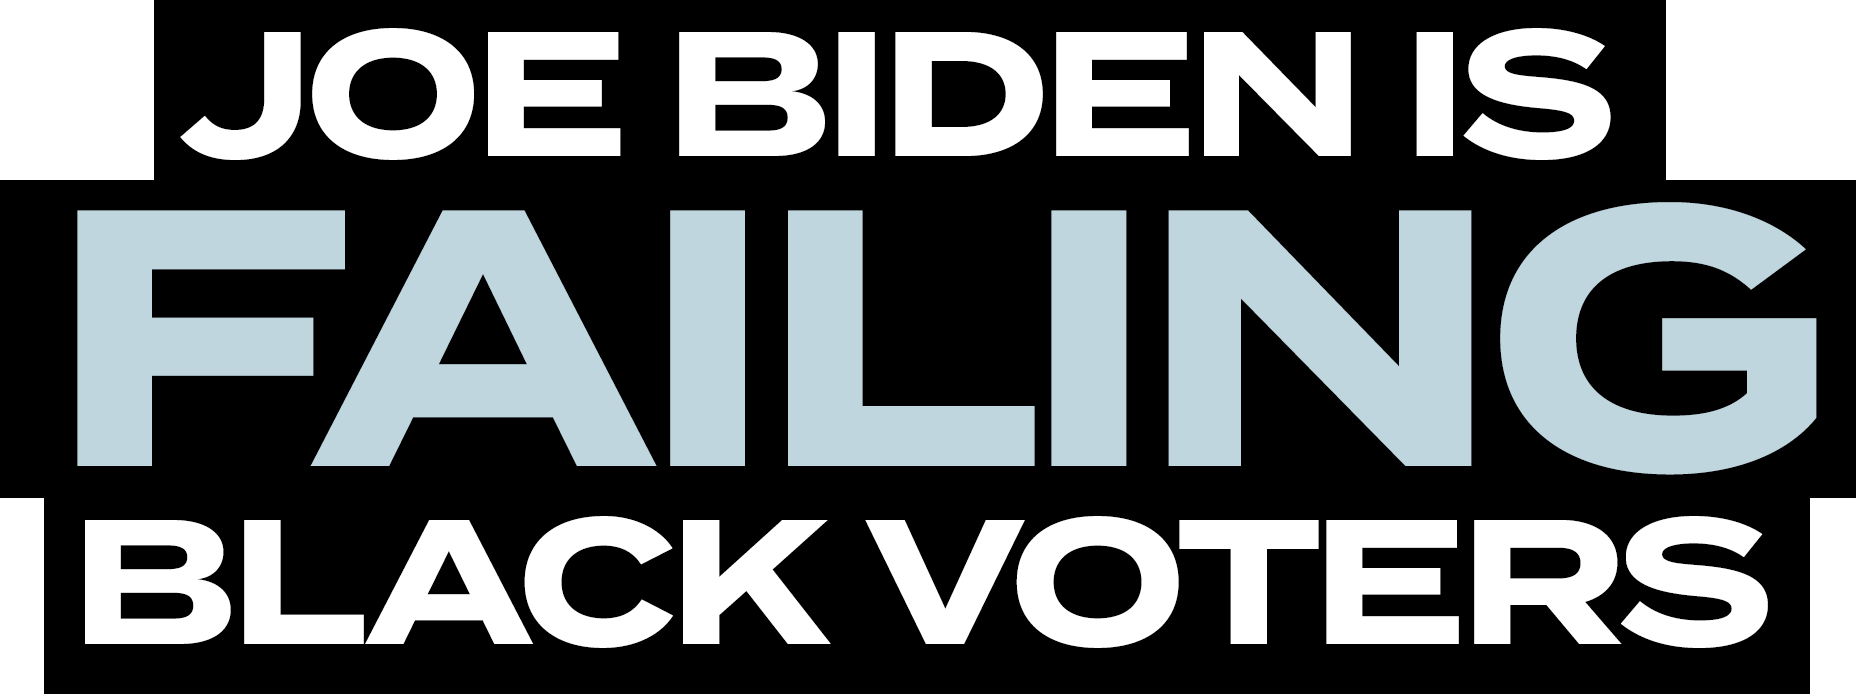 Joe Biden Is Failing Black Voters